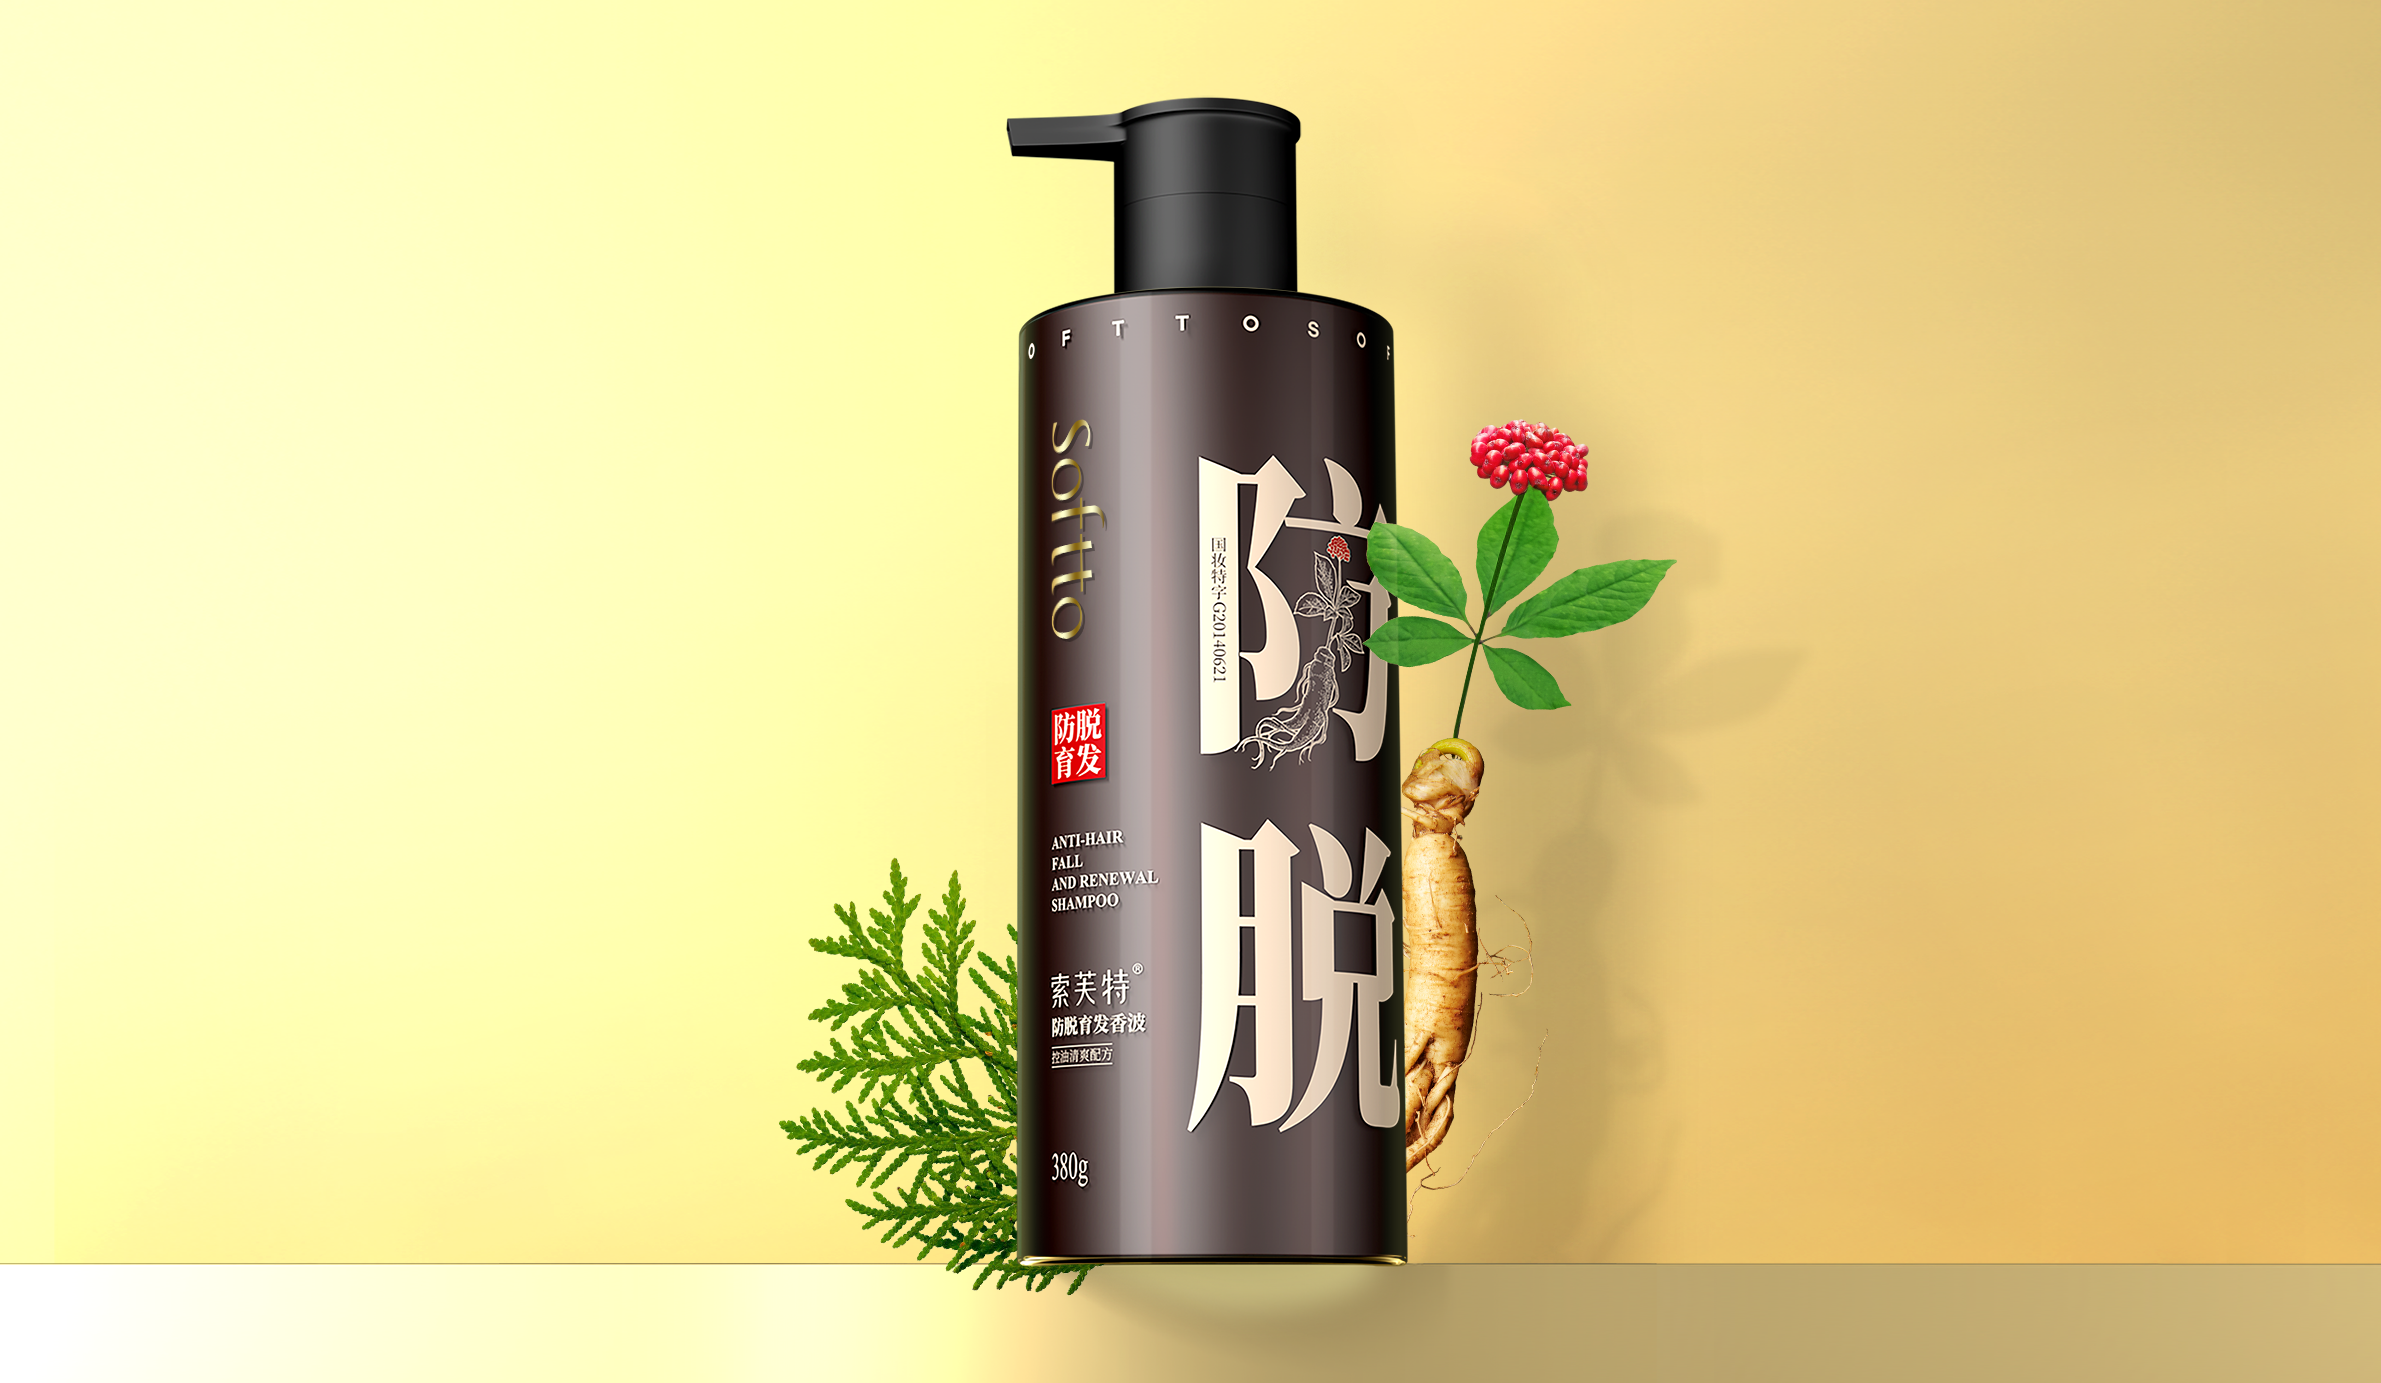 Softto Anti Hair Loss and Hair Growth Shampoo (Guo Zhuang Te Zi No.620140621)